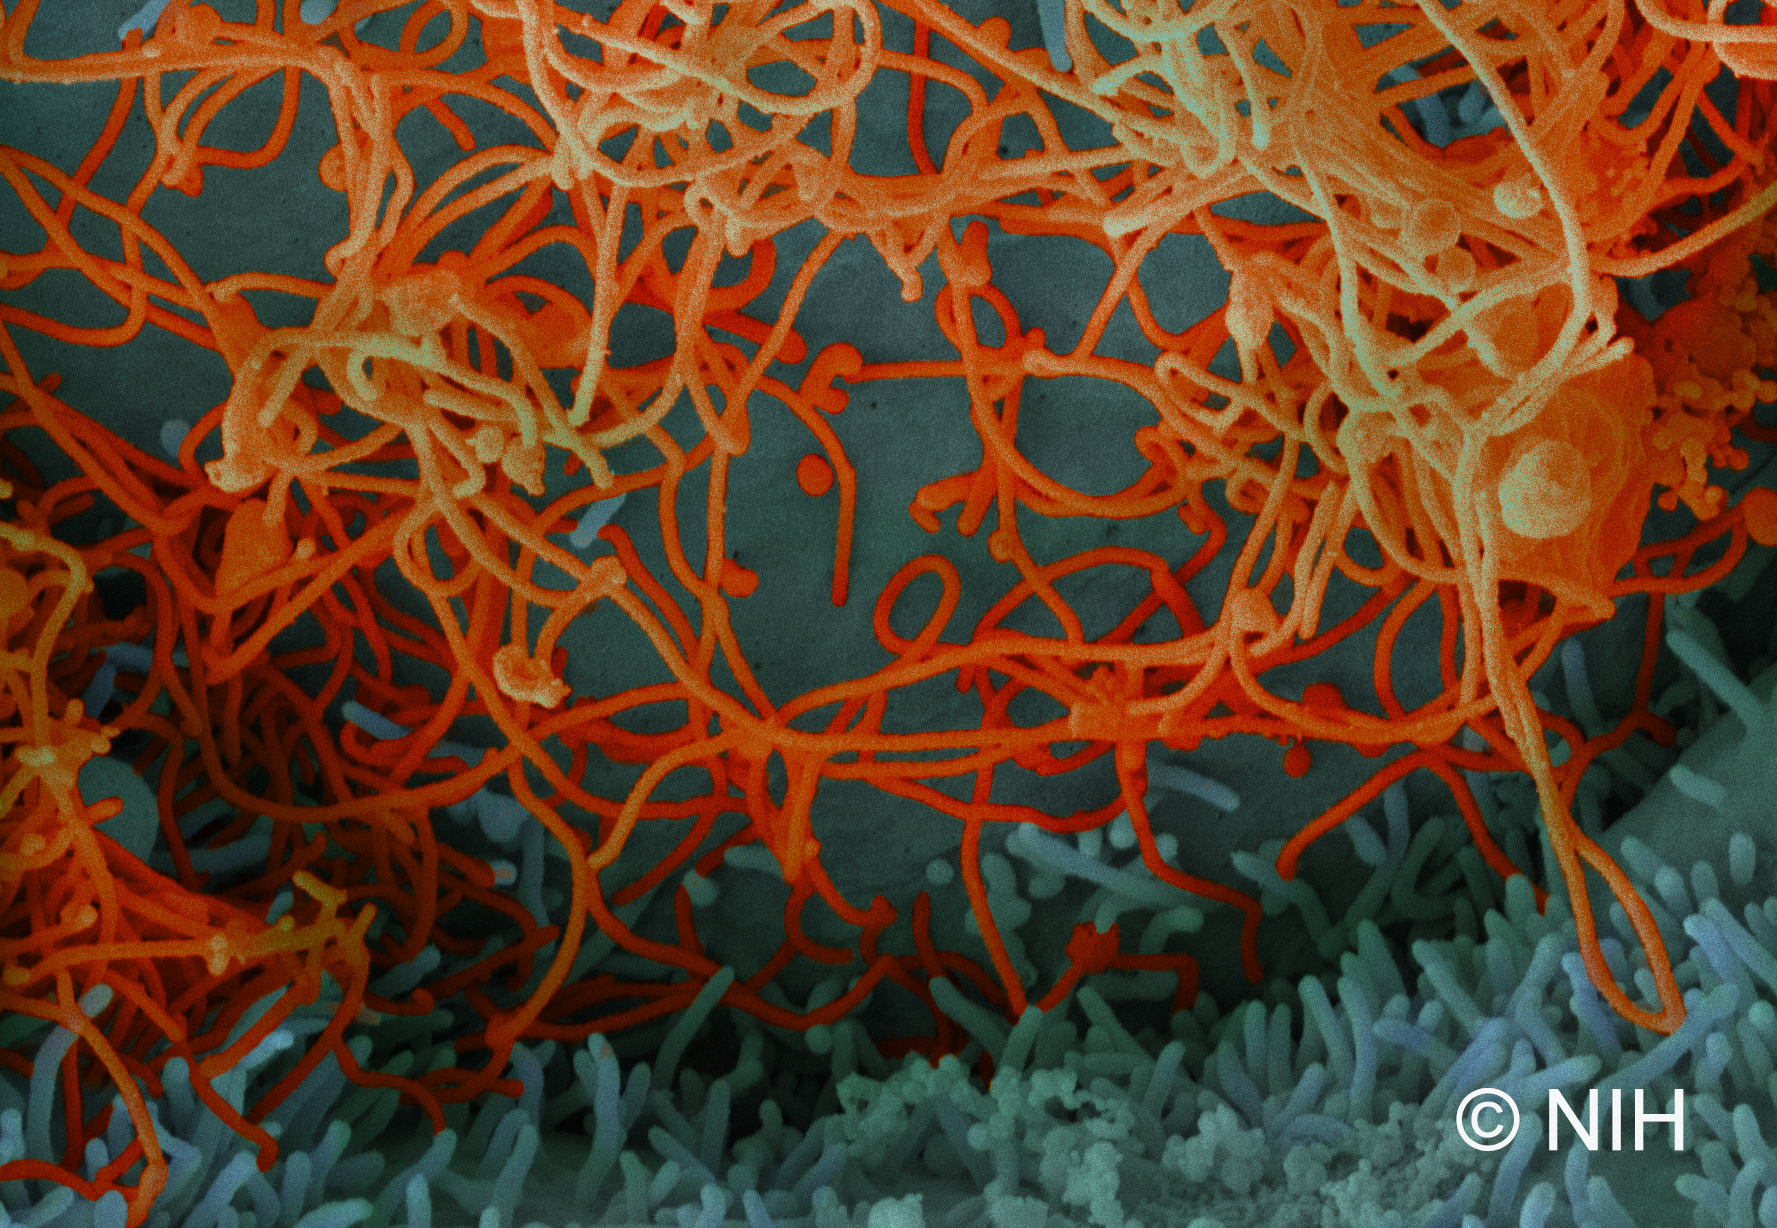 Virus Ebola _NIH